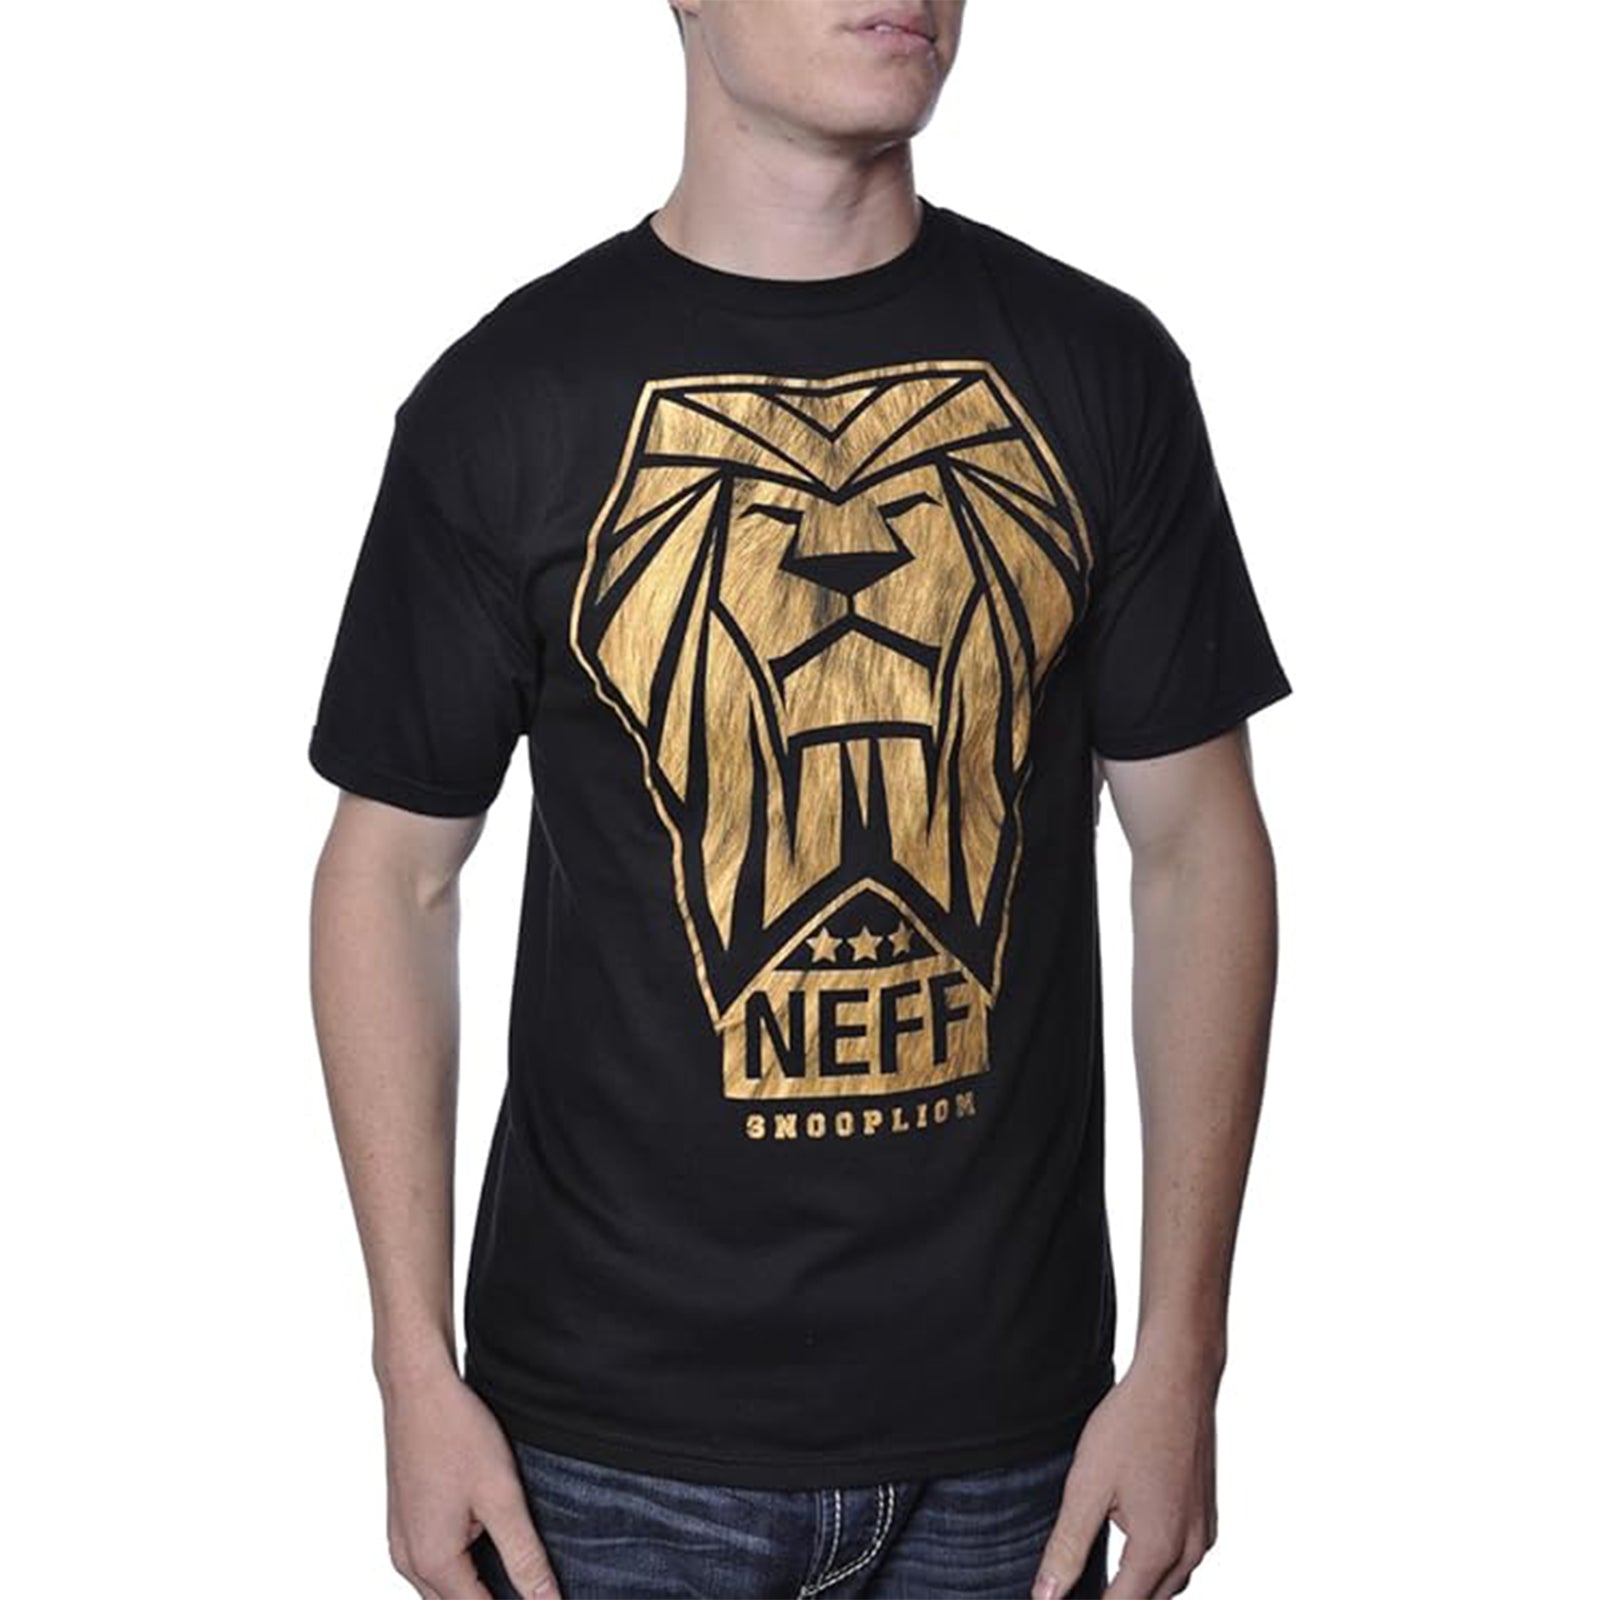 Neff Snoop Lion Men's Short-Sleeve Shirts-SS14343